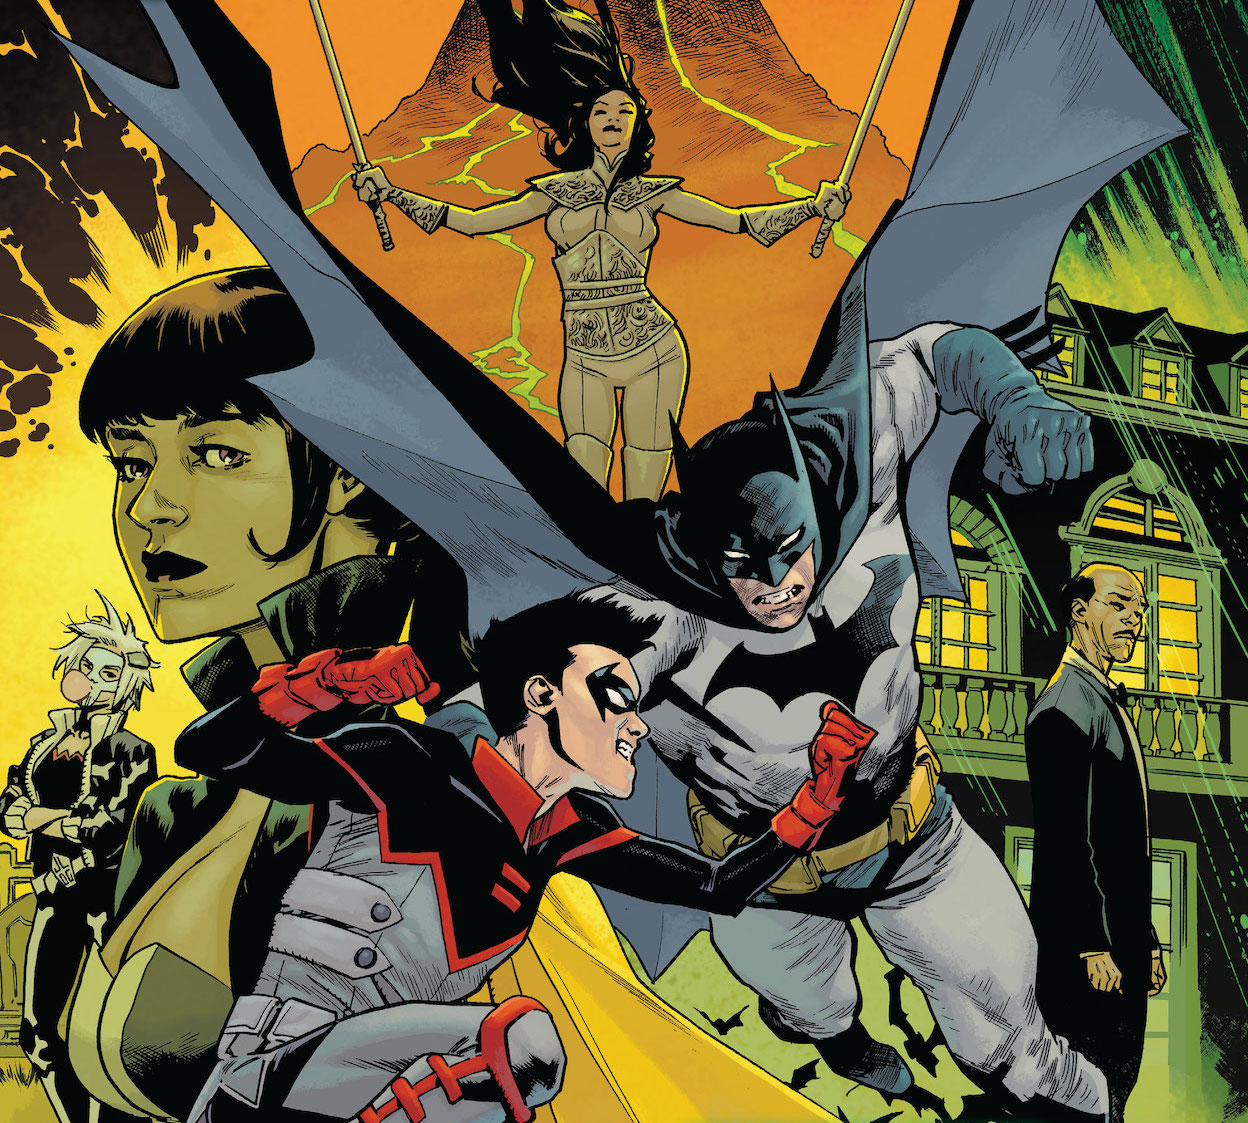 'Batman vs. Robin' #1 brings shocking twists and awe-inspiring art